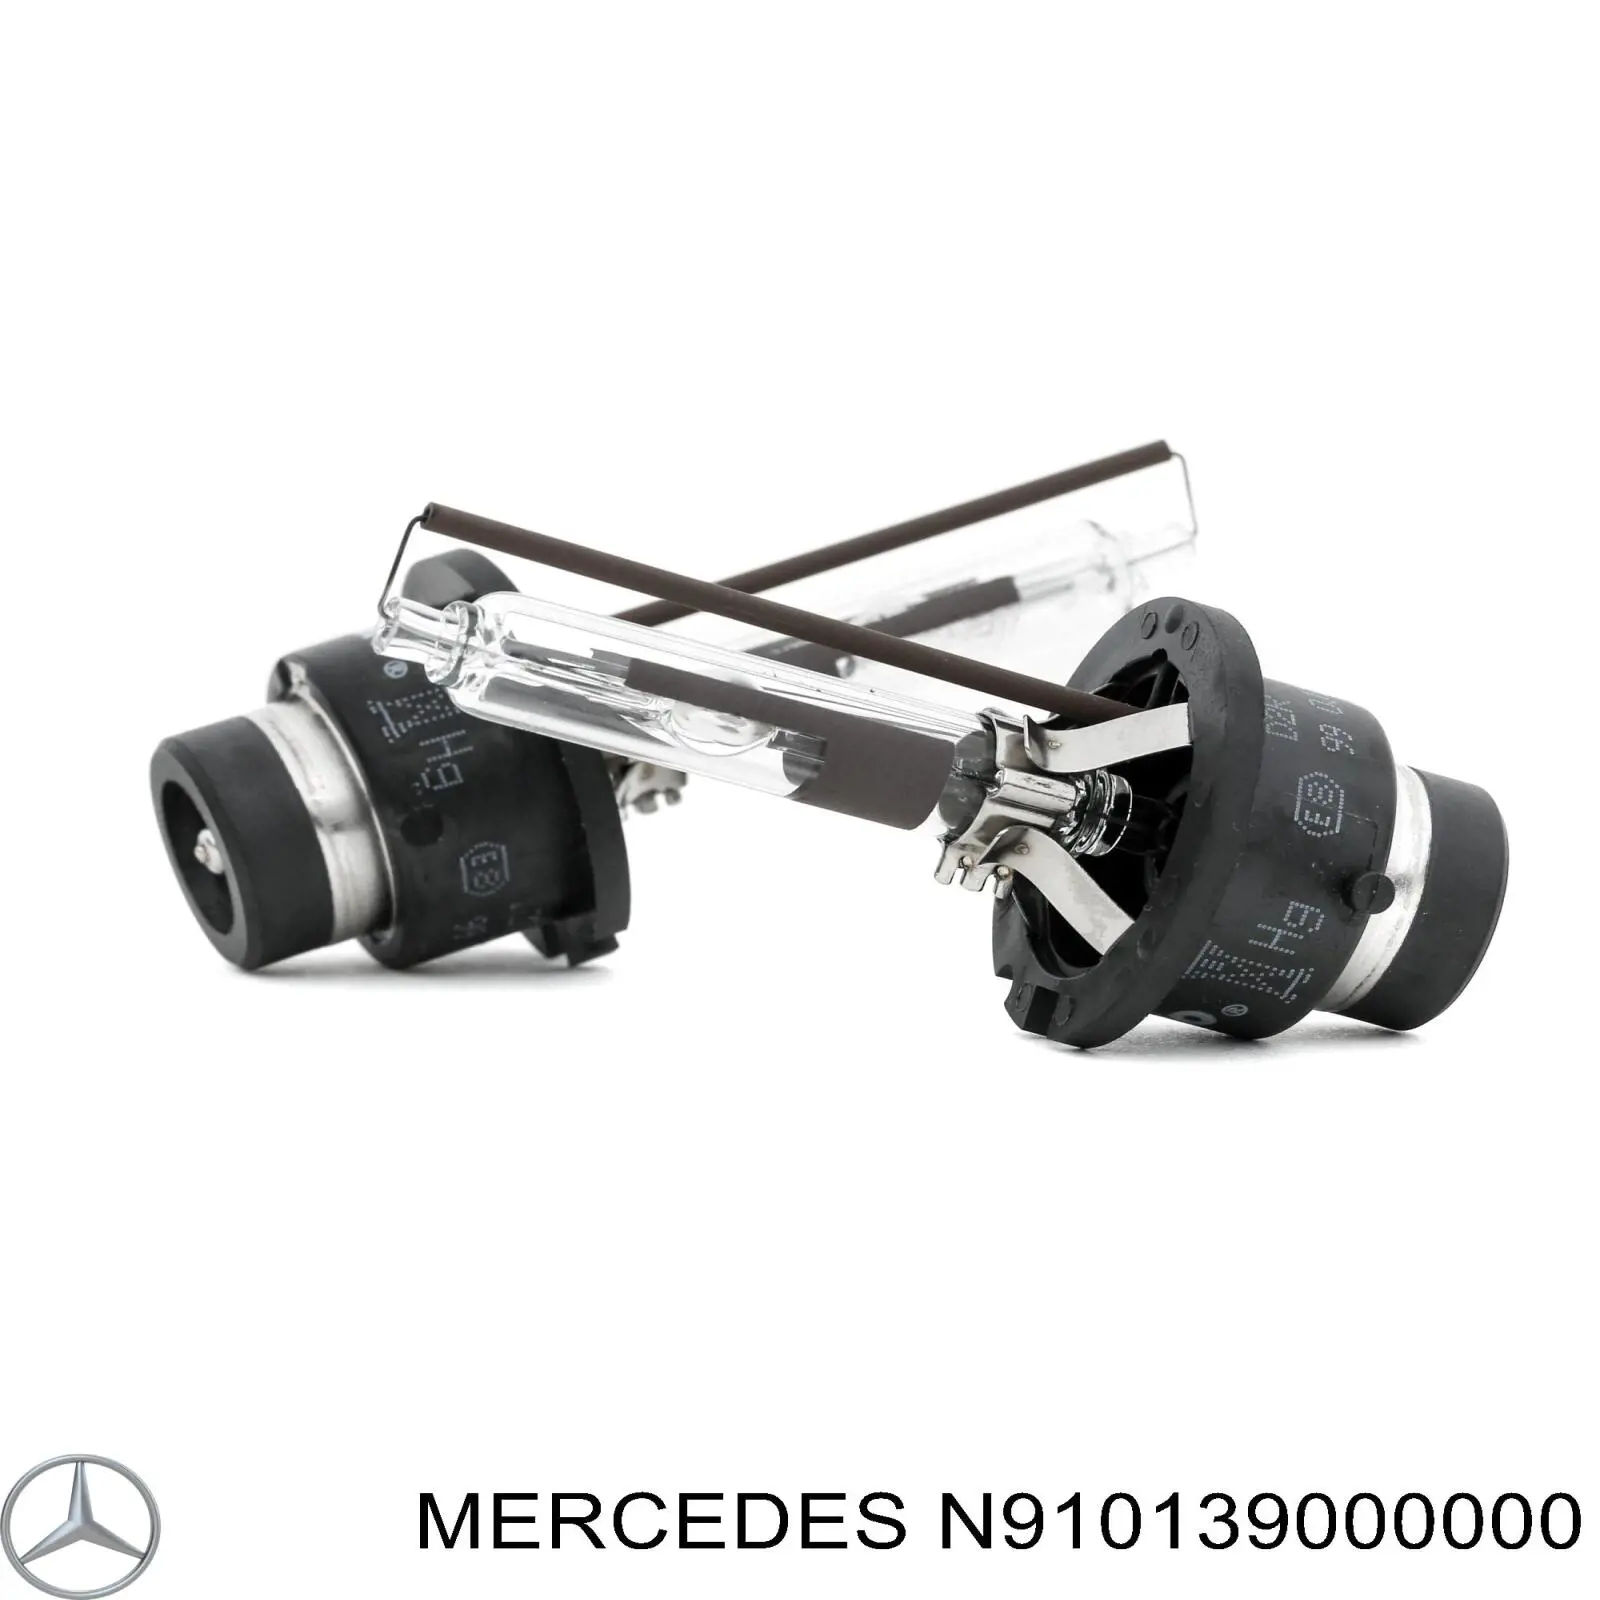 N910139000000 Mercedes bombilla de xenon